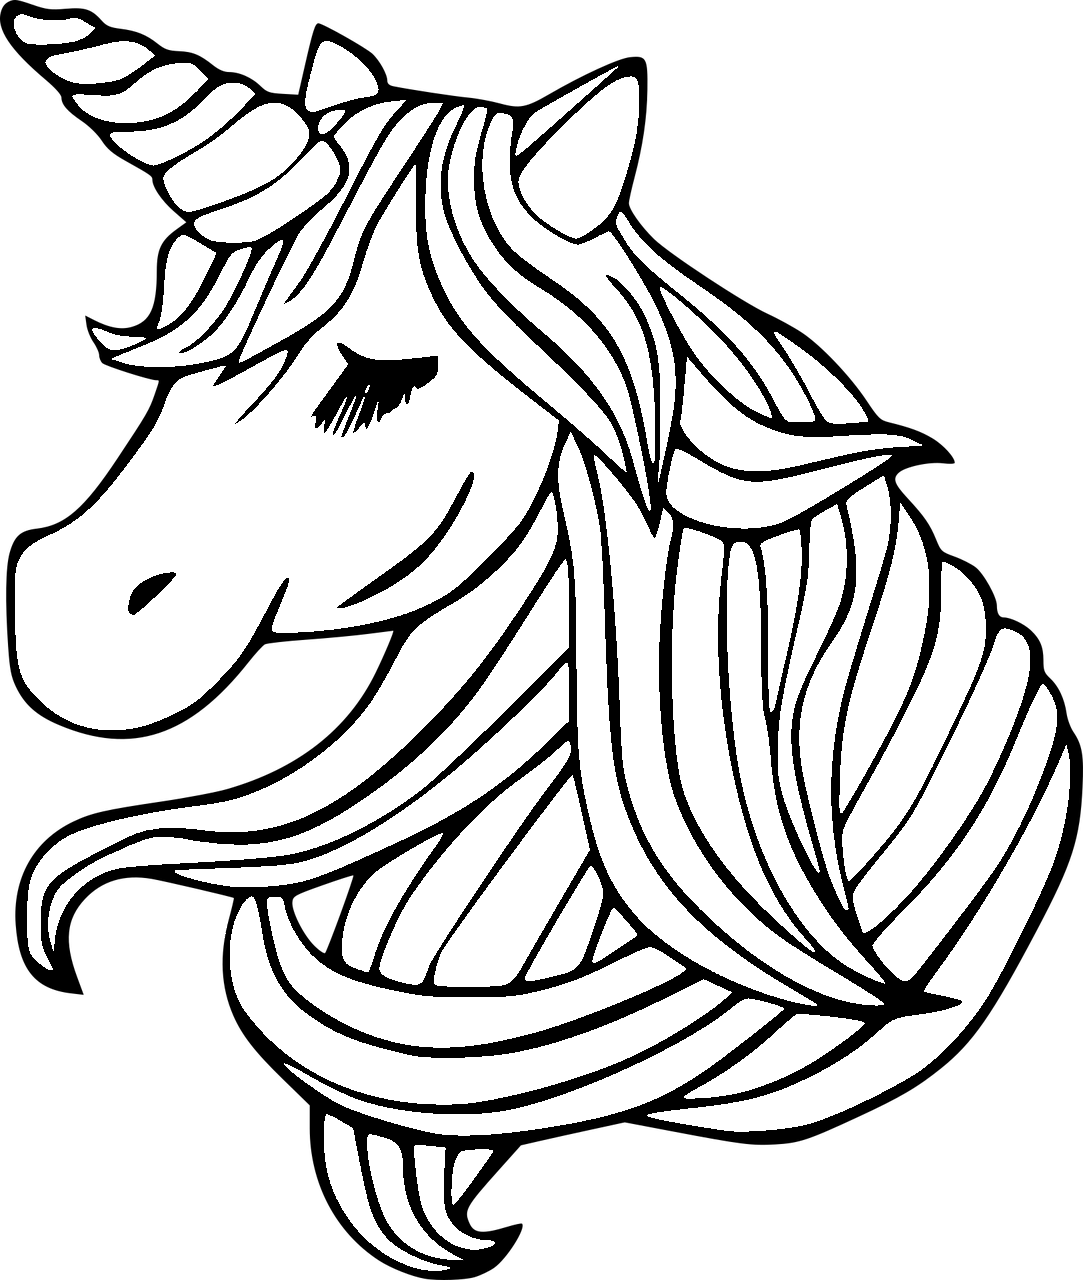 Kawaii unicorn head coloring page